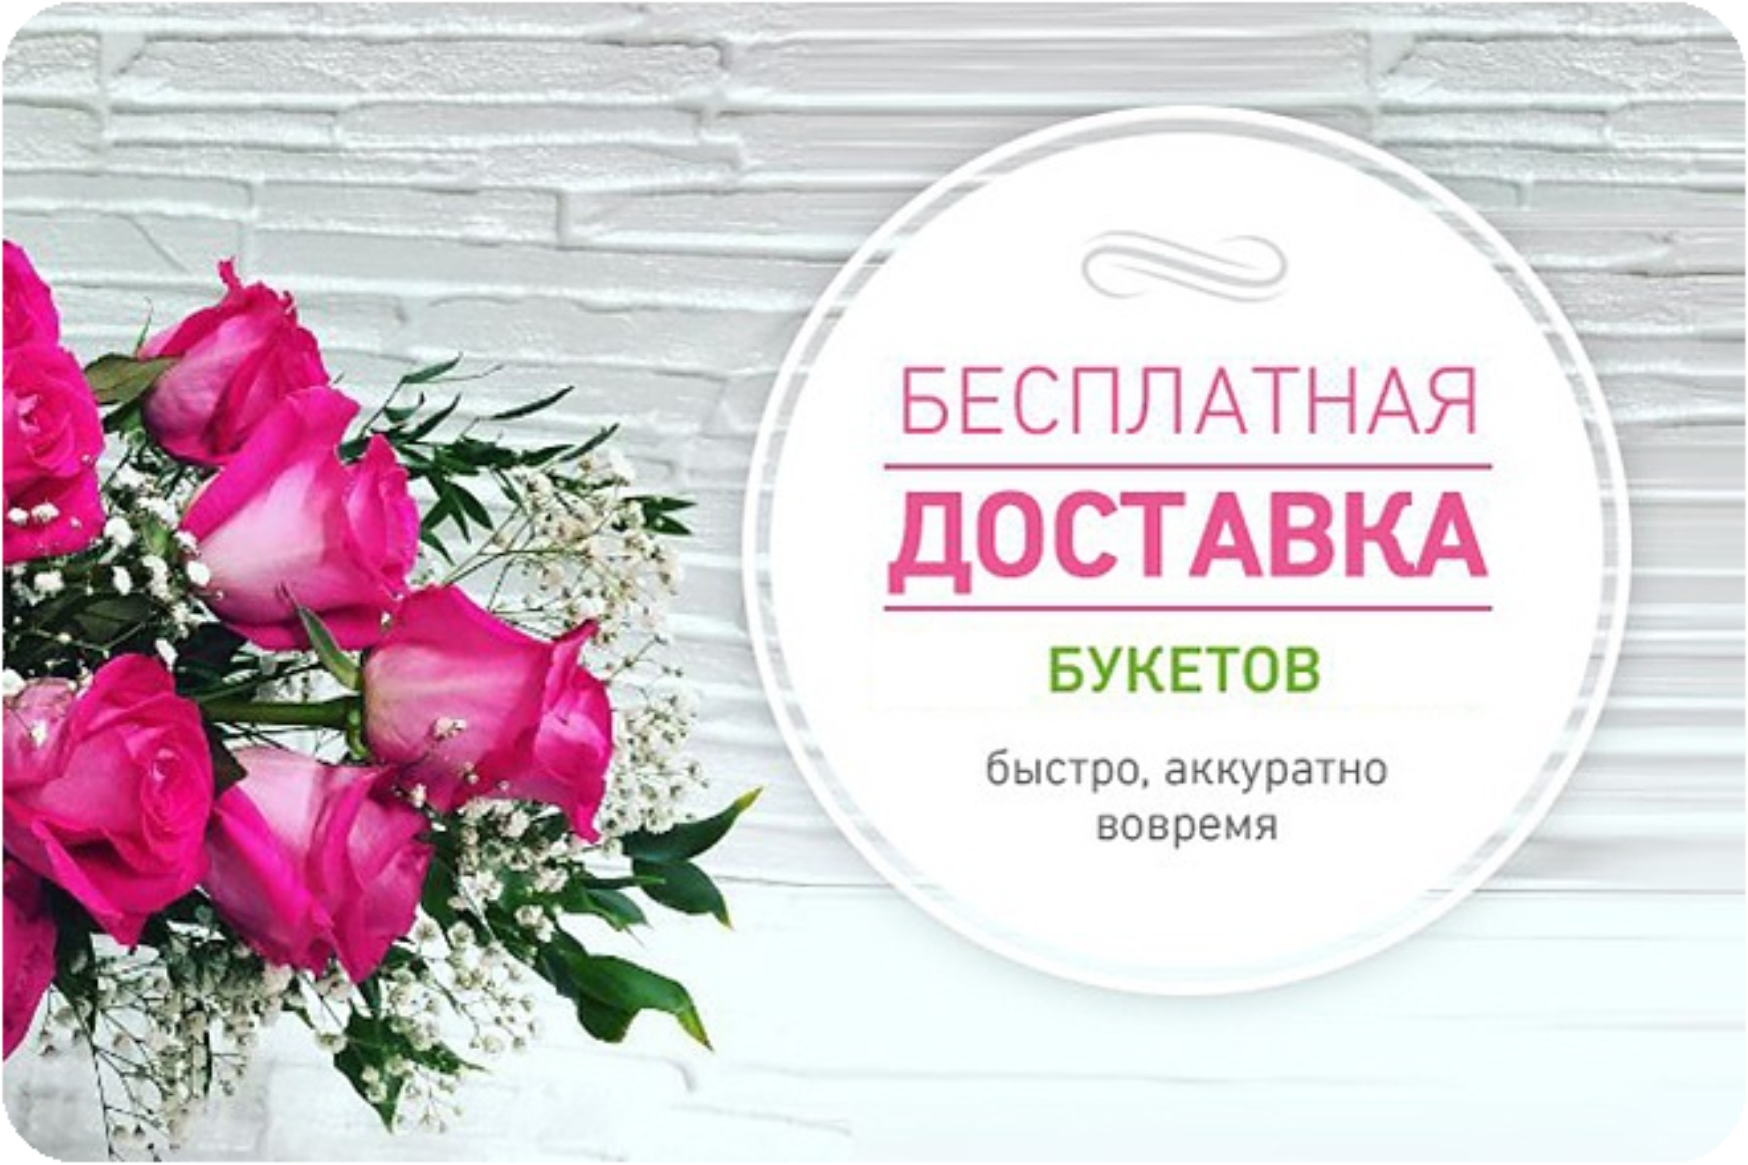 Реклама цветов. Реклама цветочного магазина. Баннер цветочного магазина. Цветы реклама.